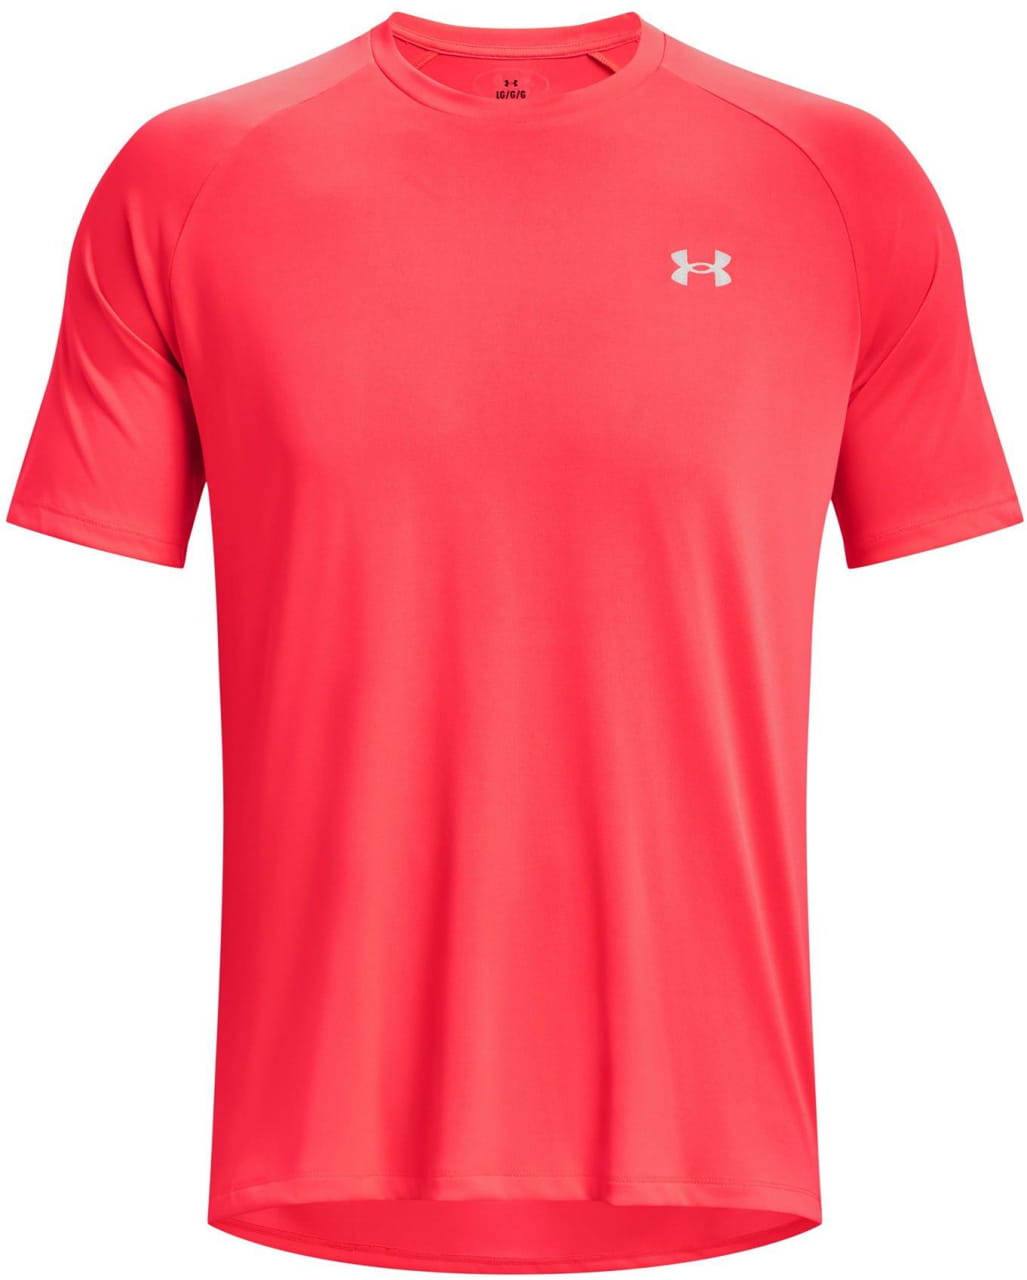 Sporthemd für Männer Under Armour Tech Reflective SS-RED